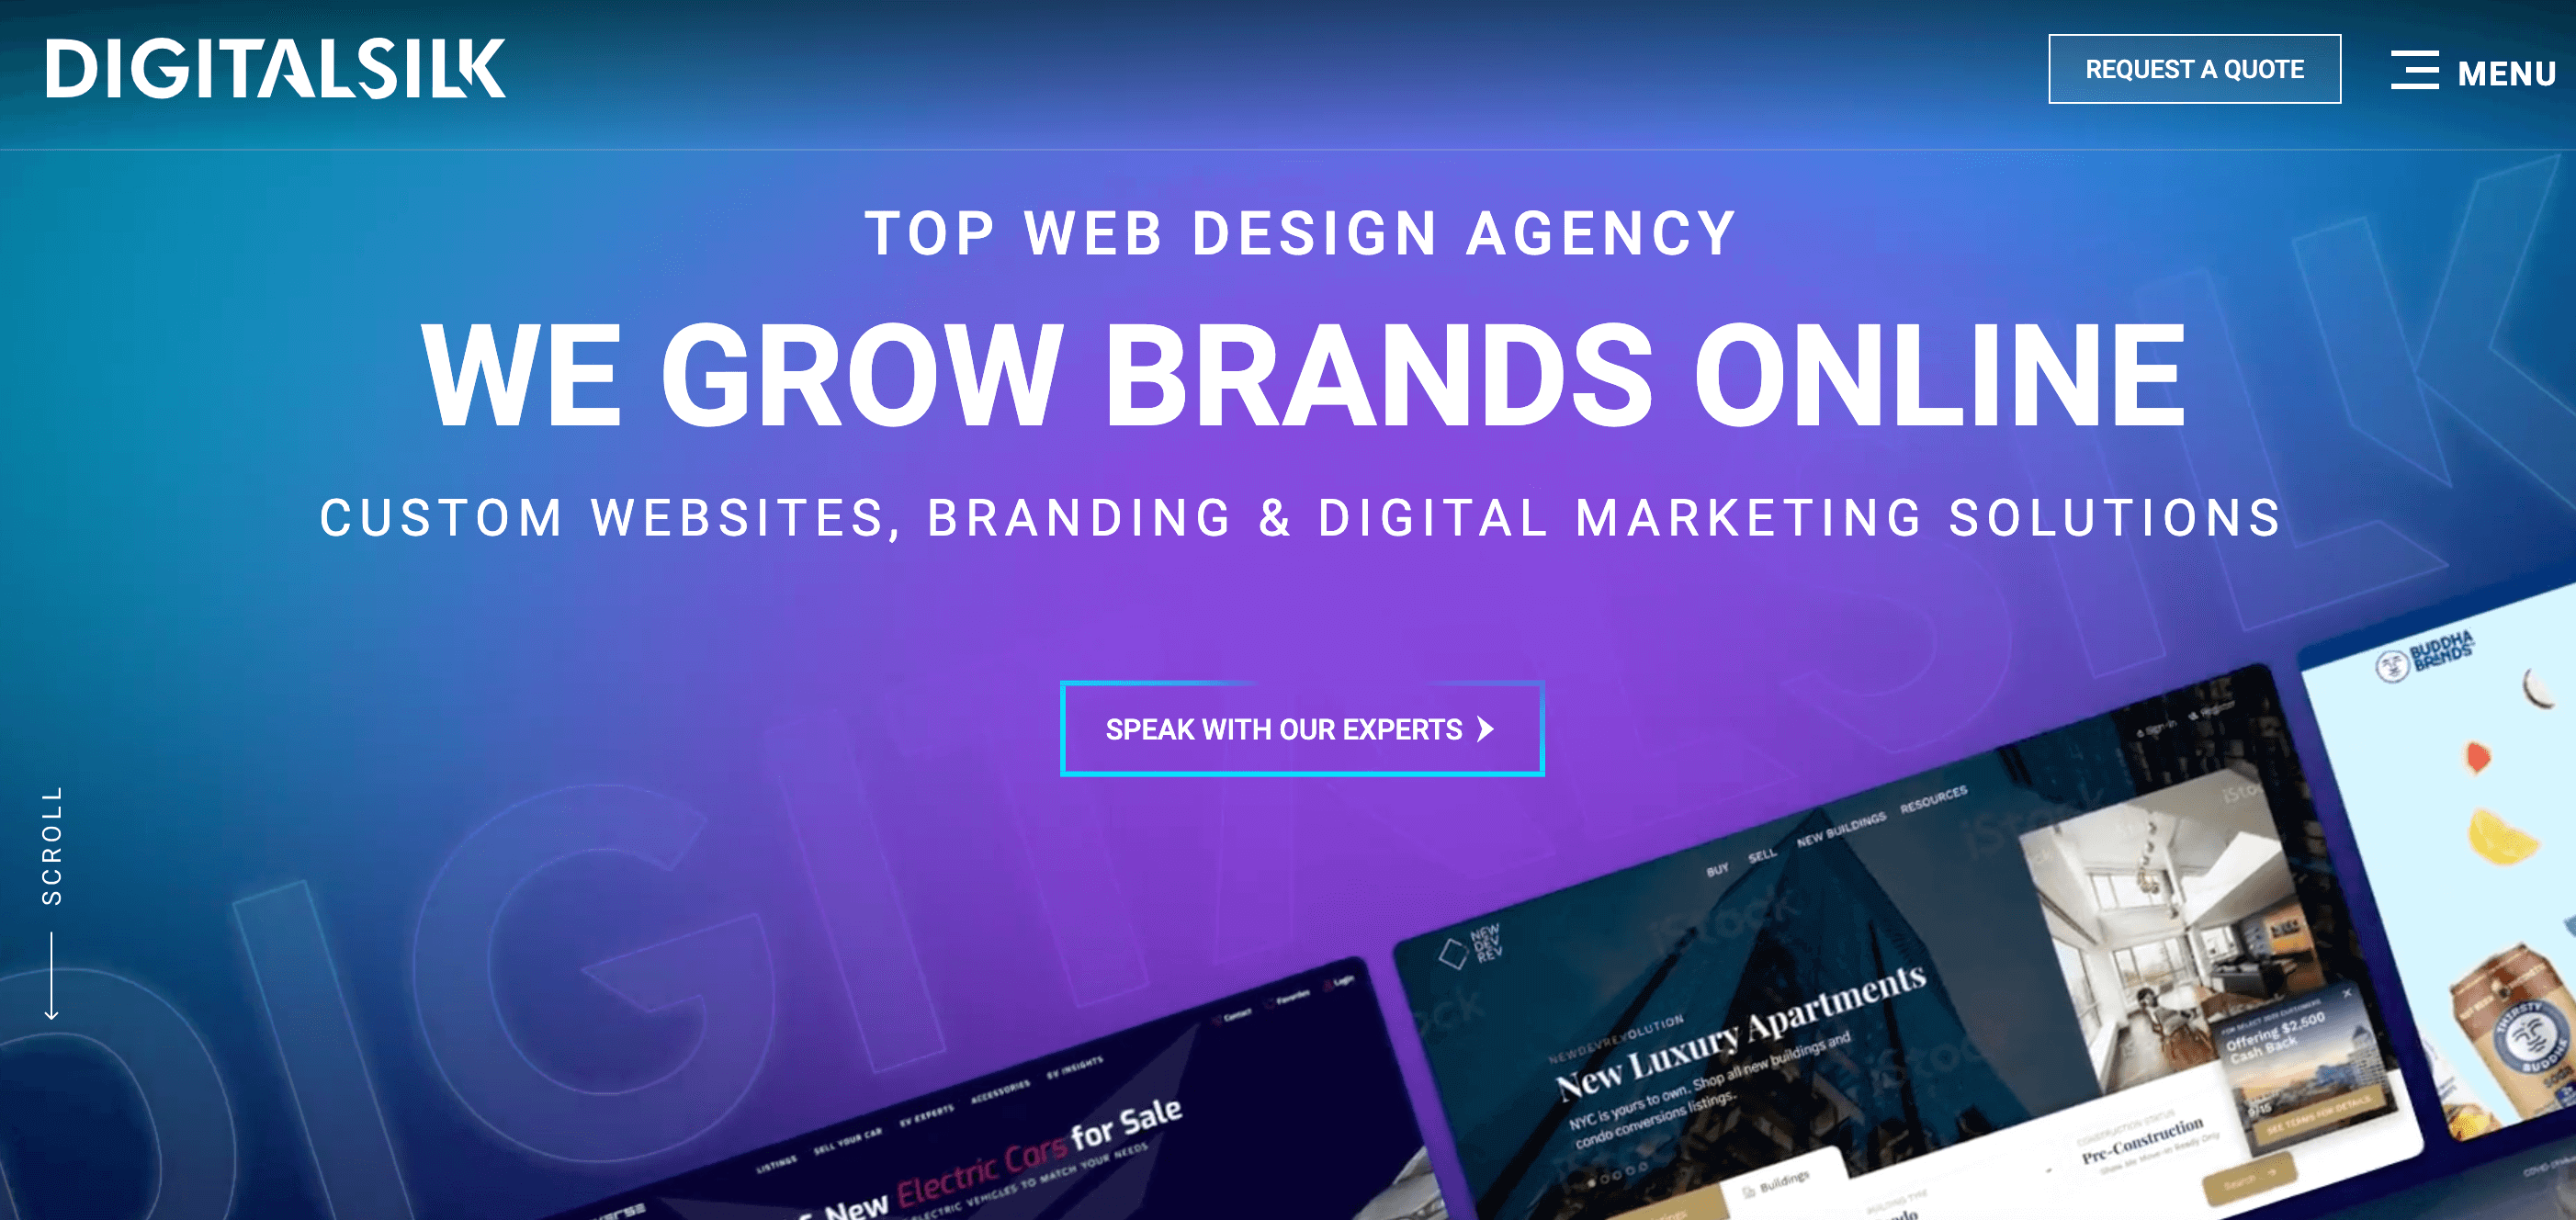 Top Web Design Companies